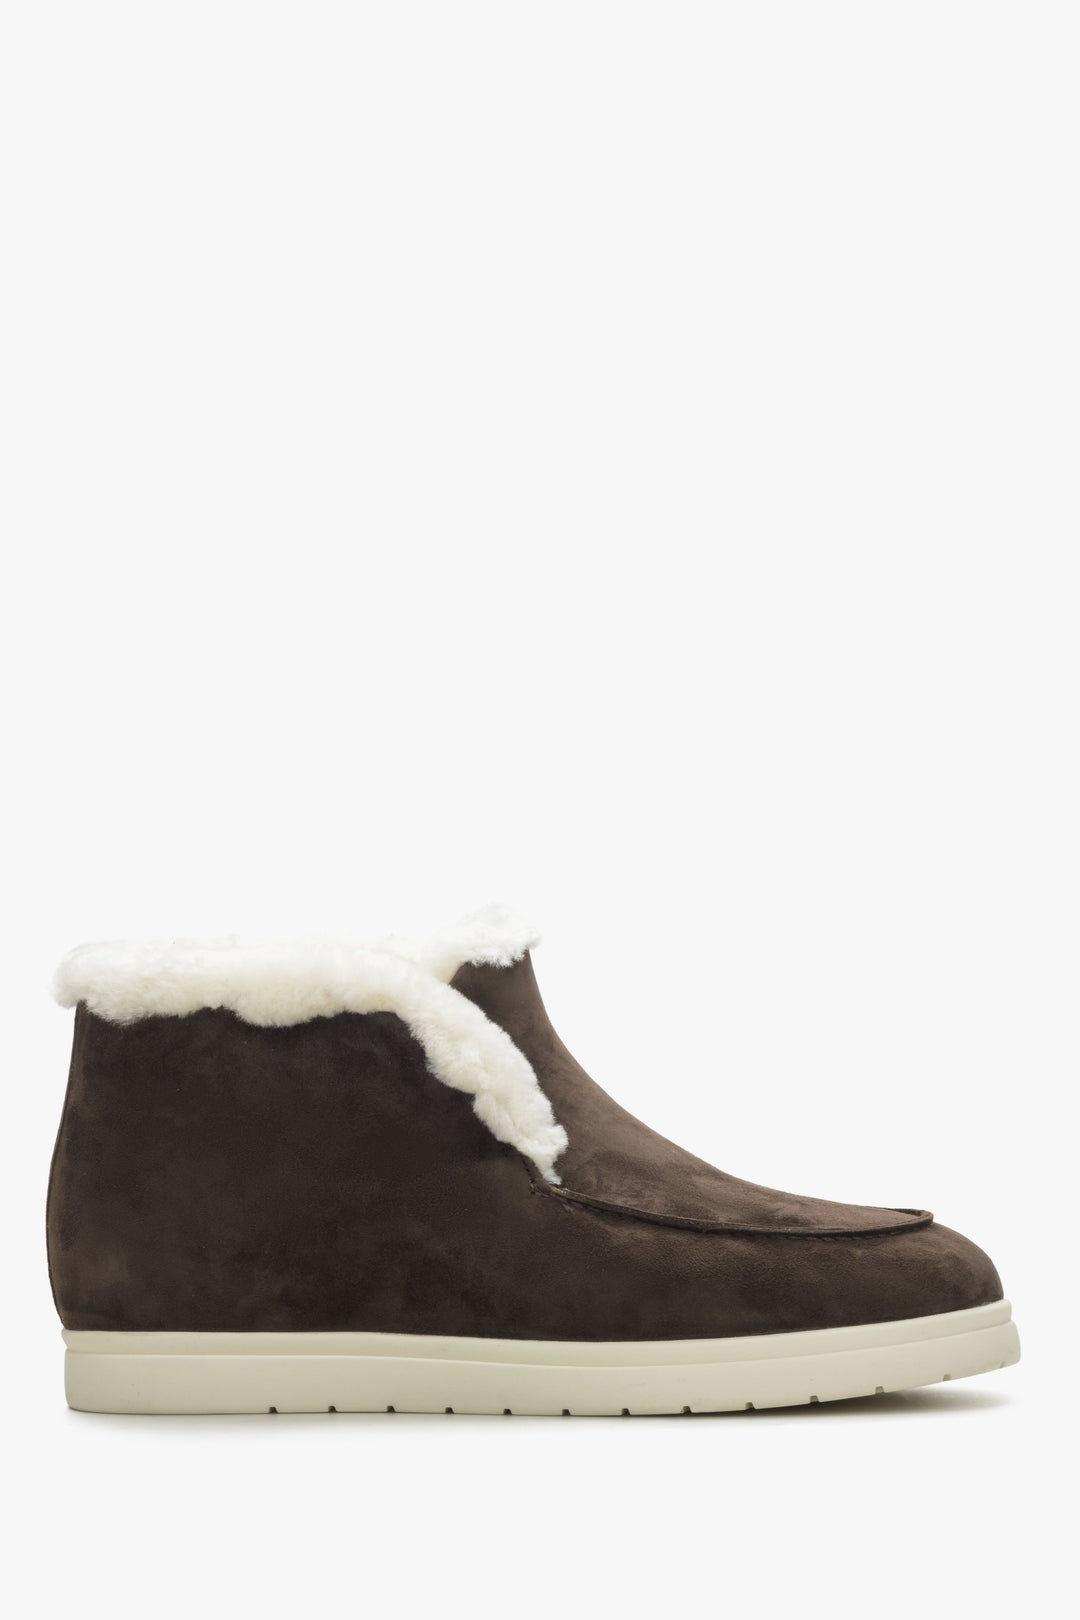 Fur and velour saddle brown low-top boots Estro - shoe profile.